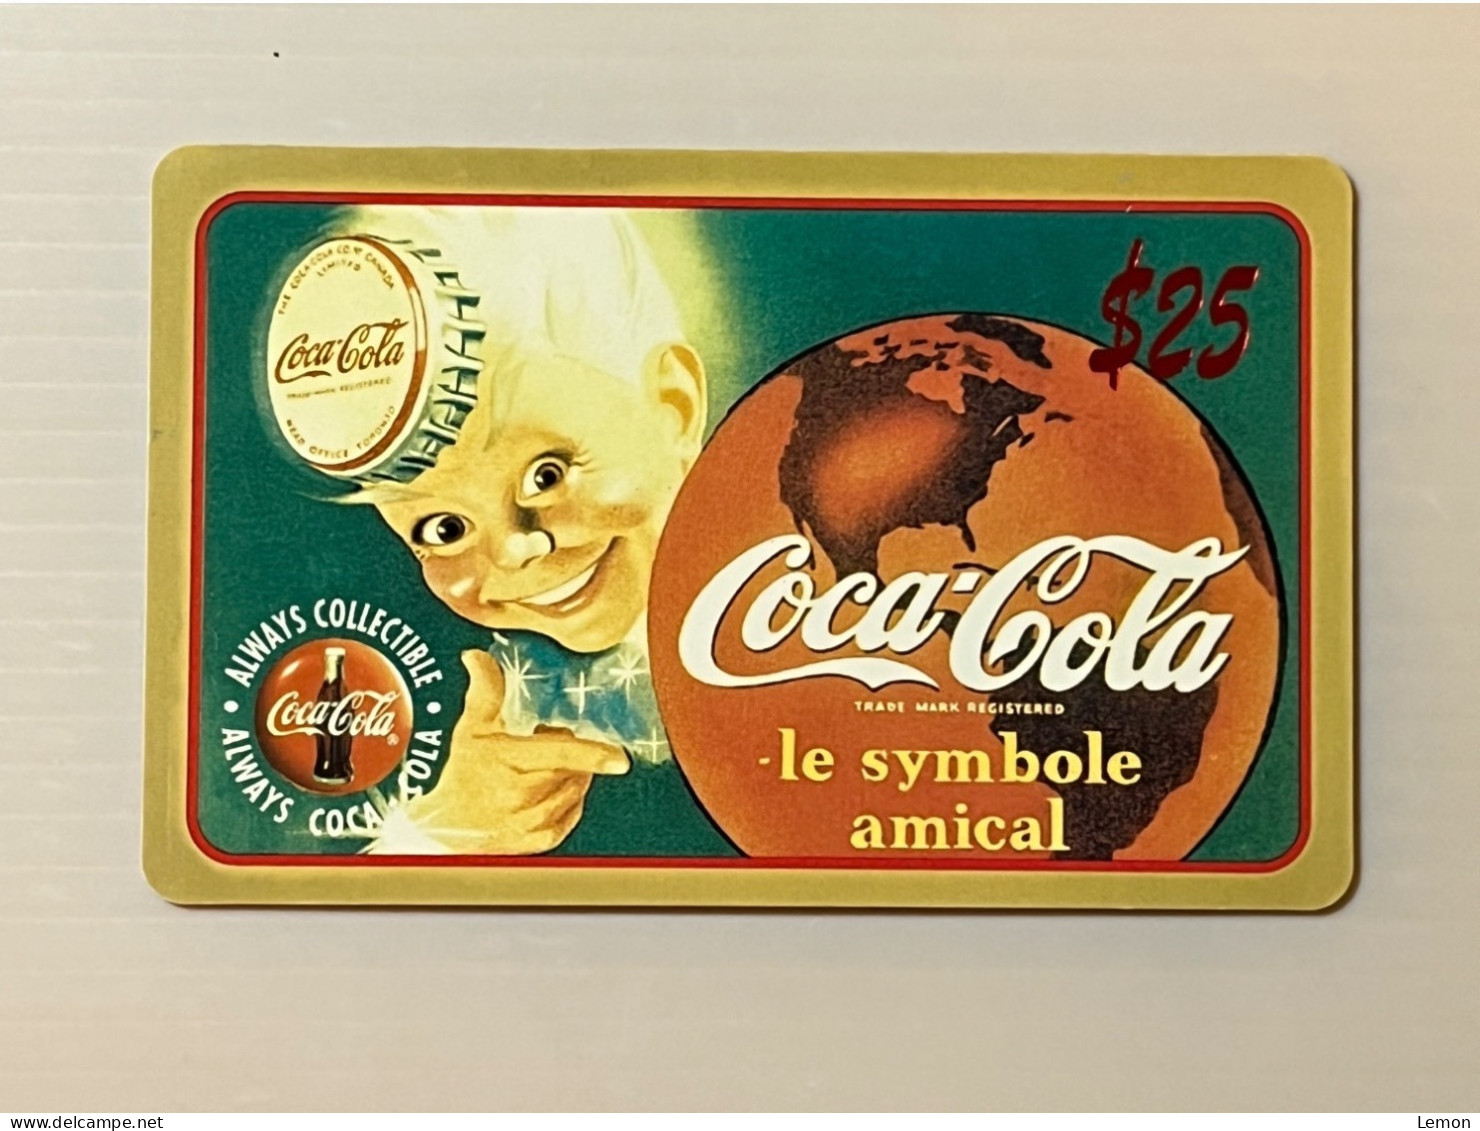 Mint USA UNITED STATES America Prepaid Telecard Phonecard, Coca Cola Boy $25 Card Gold Border, Set Of 1 Mint Card - Sammlungen